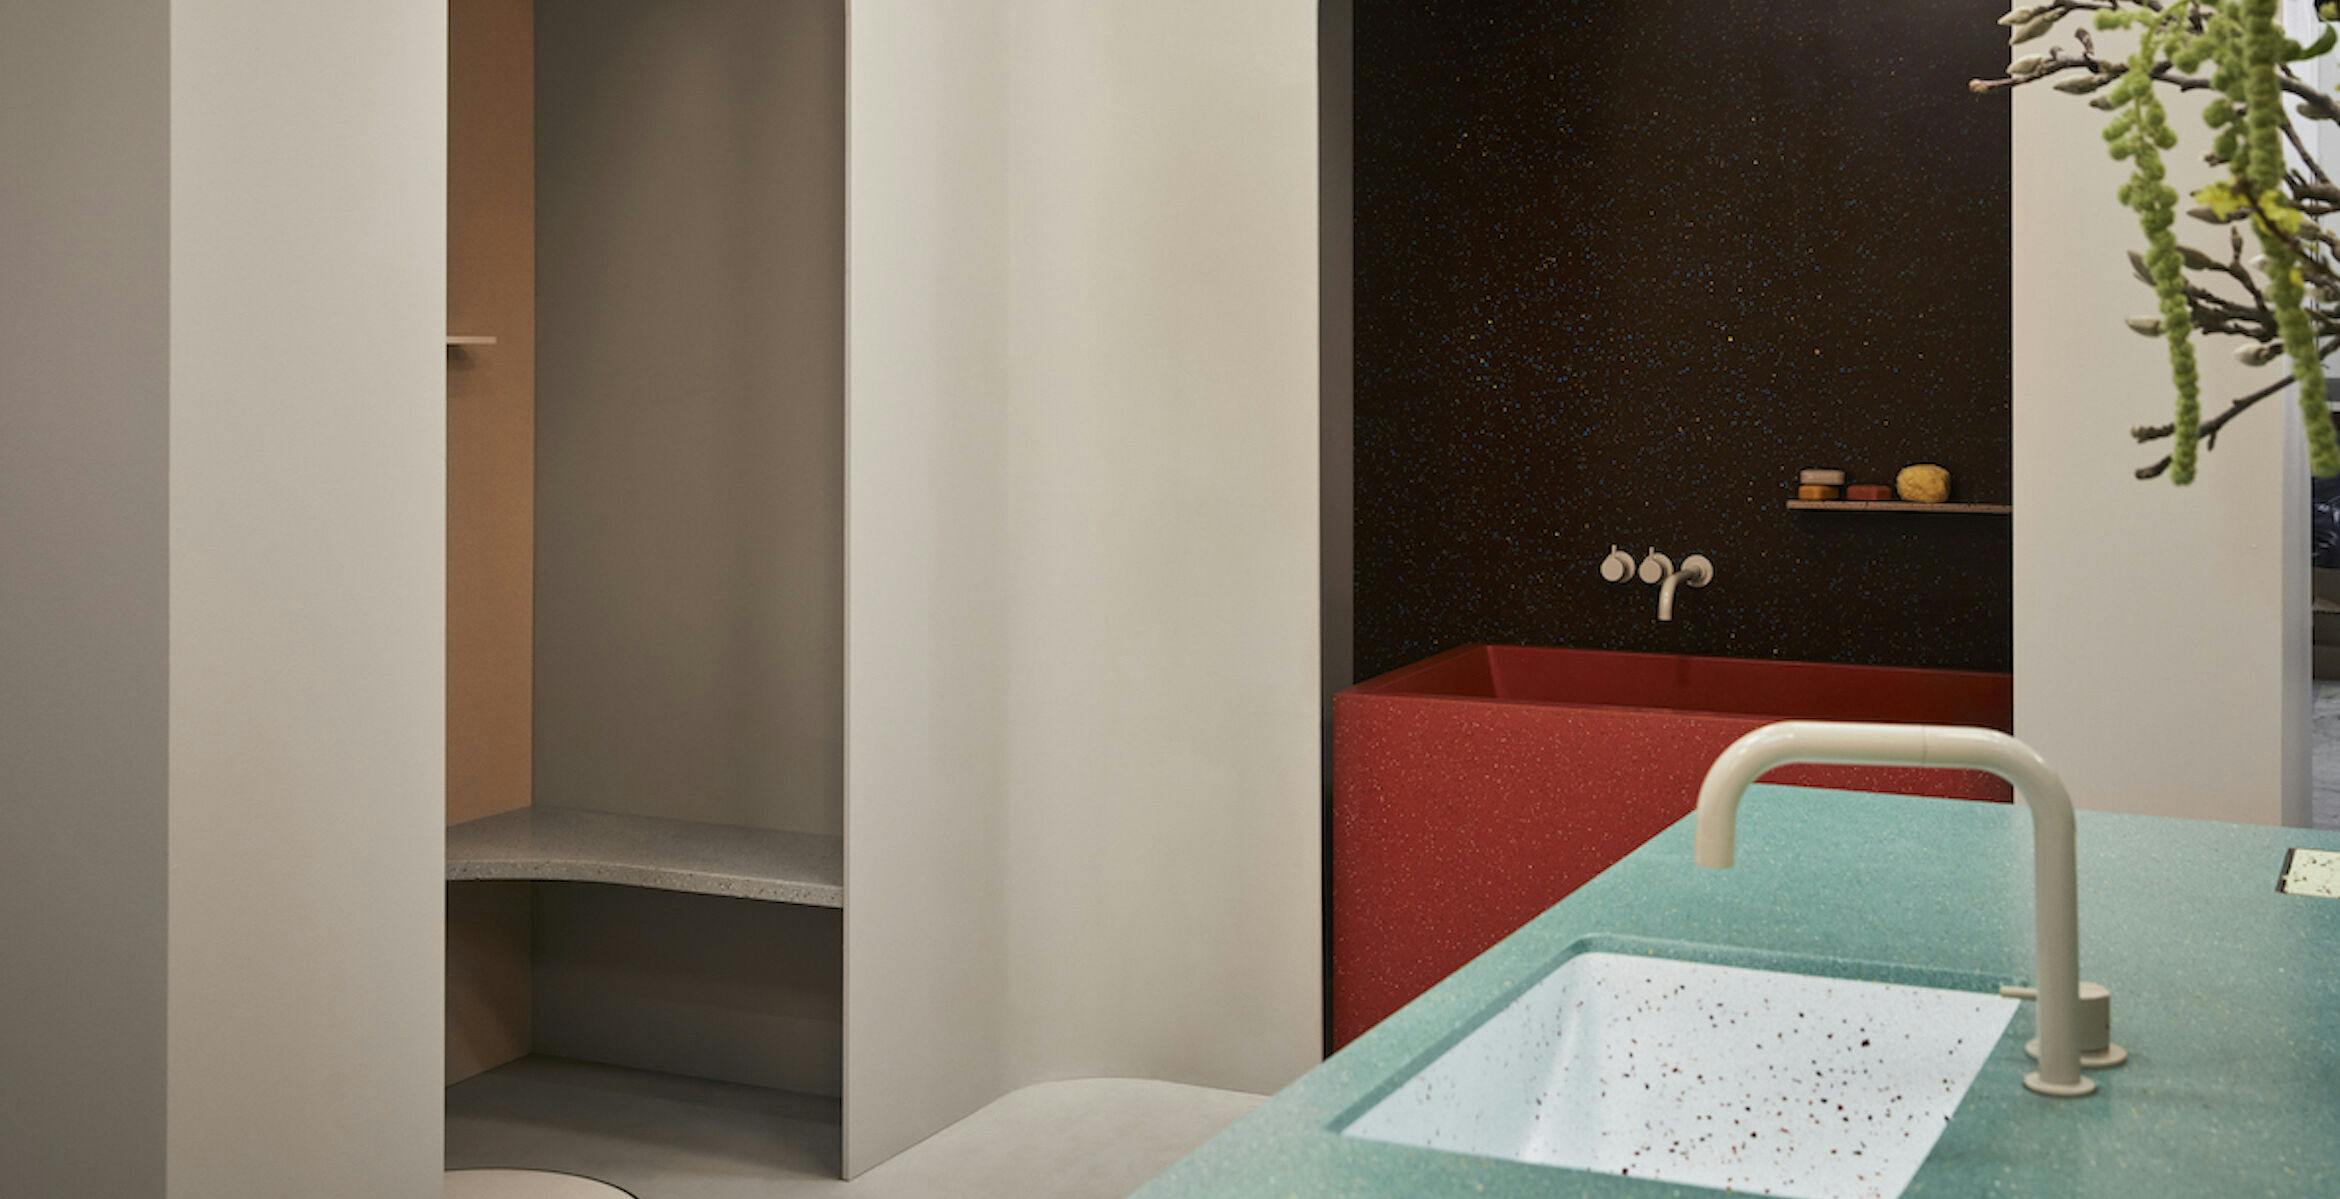 Durat showroom display showing shower seat, bathroom shelves, cast bathtub, kitchen worktop and custom Palace sink